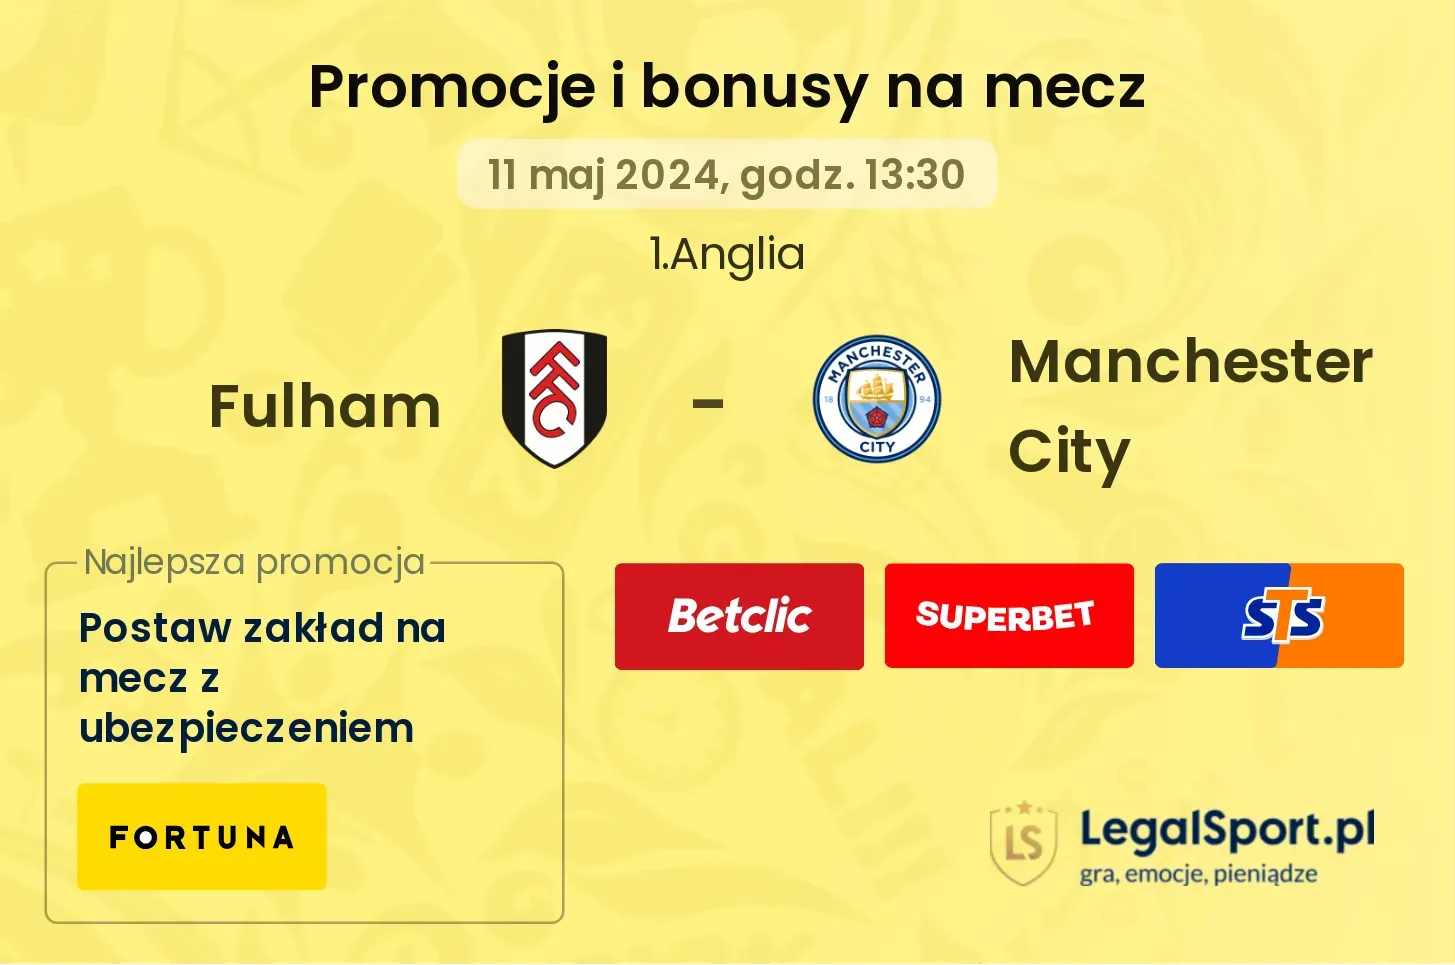 Fulham - Manchester City promocje i bonusy (11.05, 13:30)